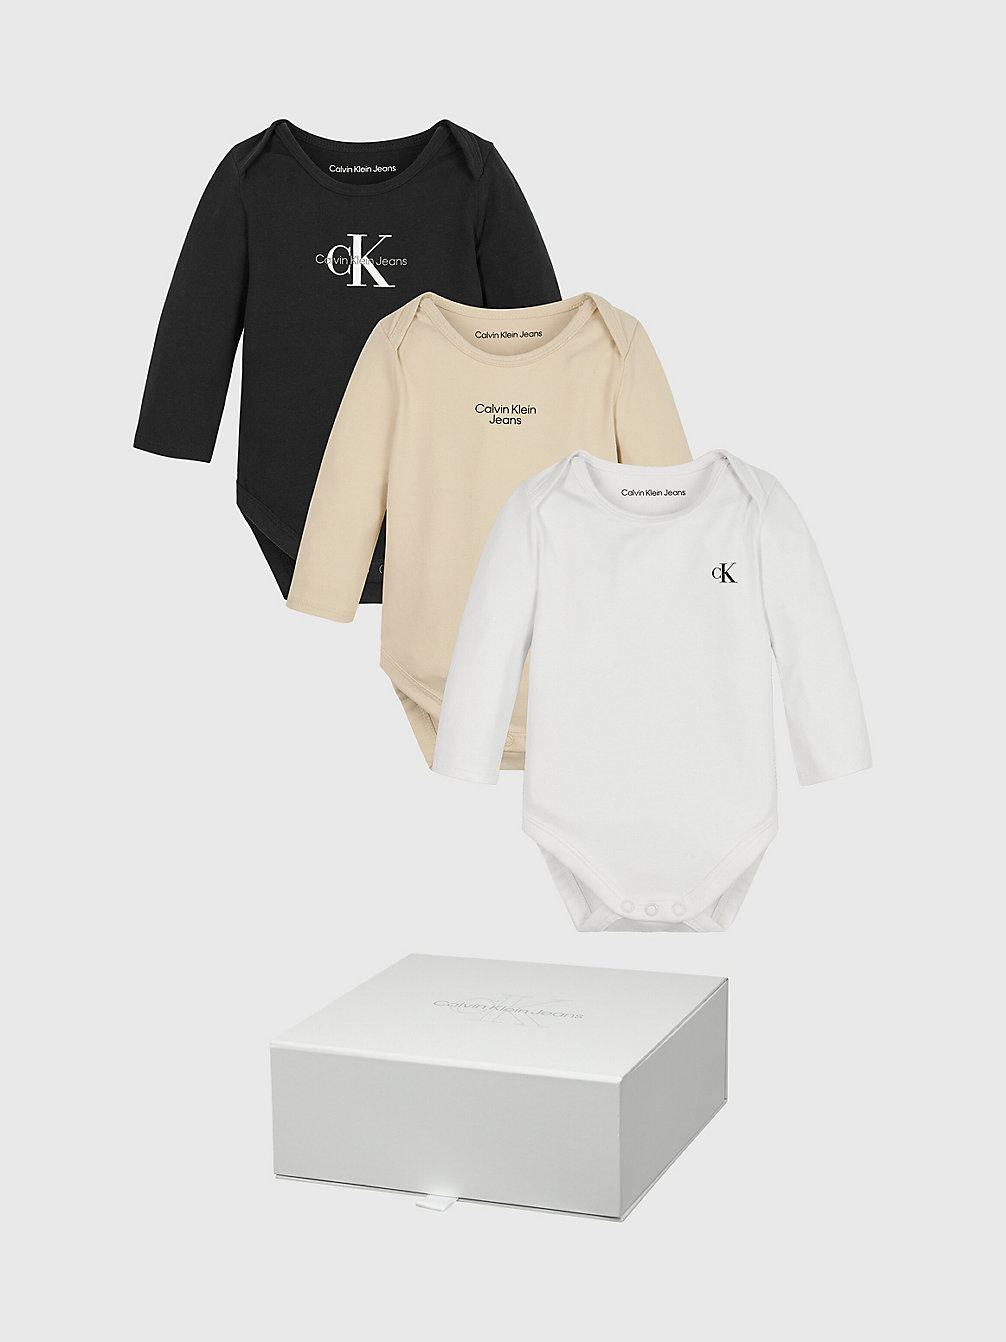 BLACK/MUSLIN/BRIGHT WHITE > Подарочный набор из 3 боди для новорожденных > undefined newborn - Calvin Klein